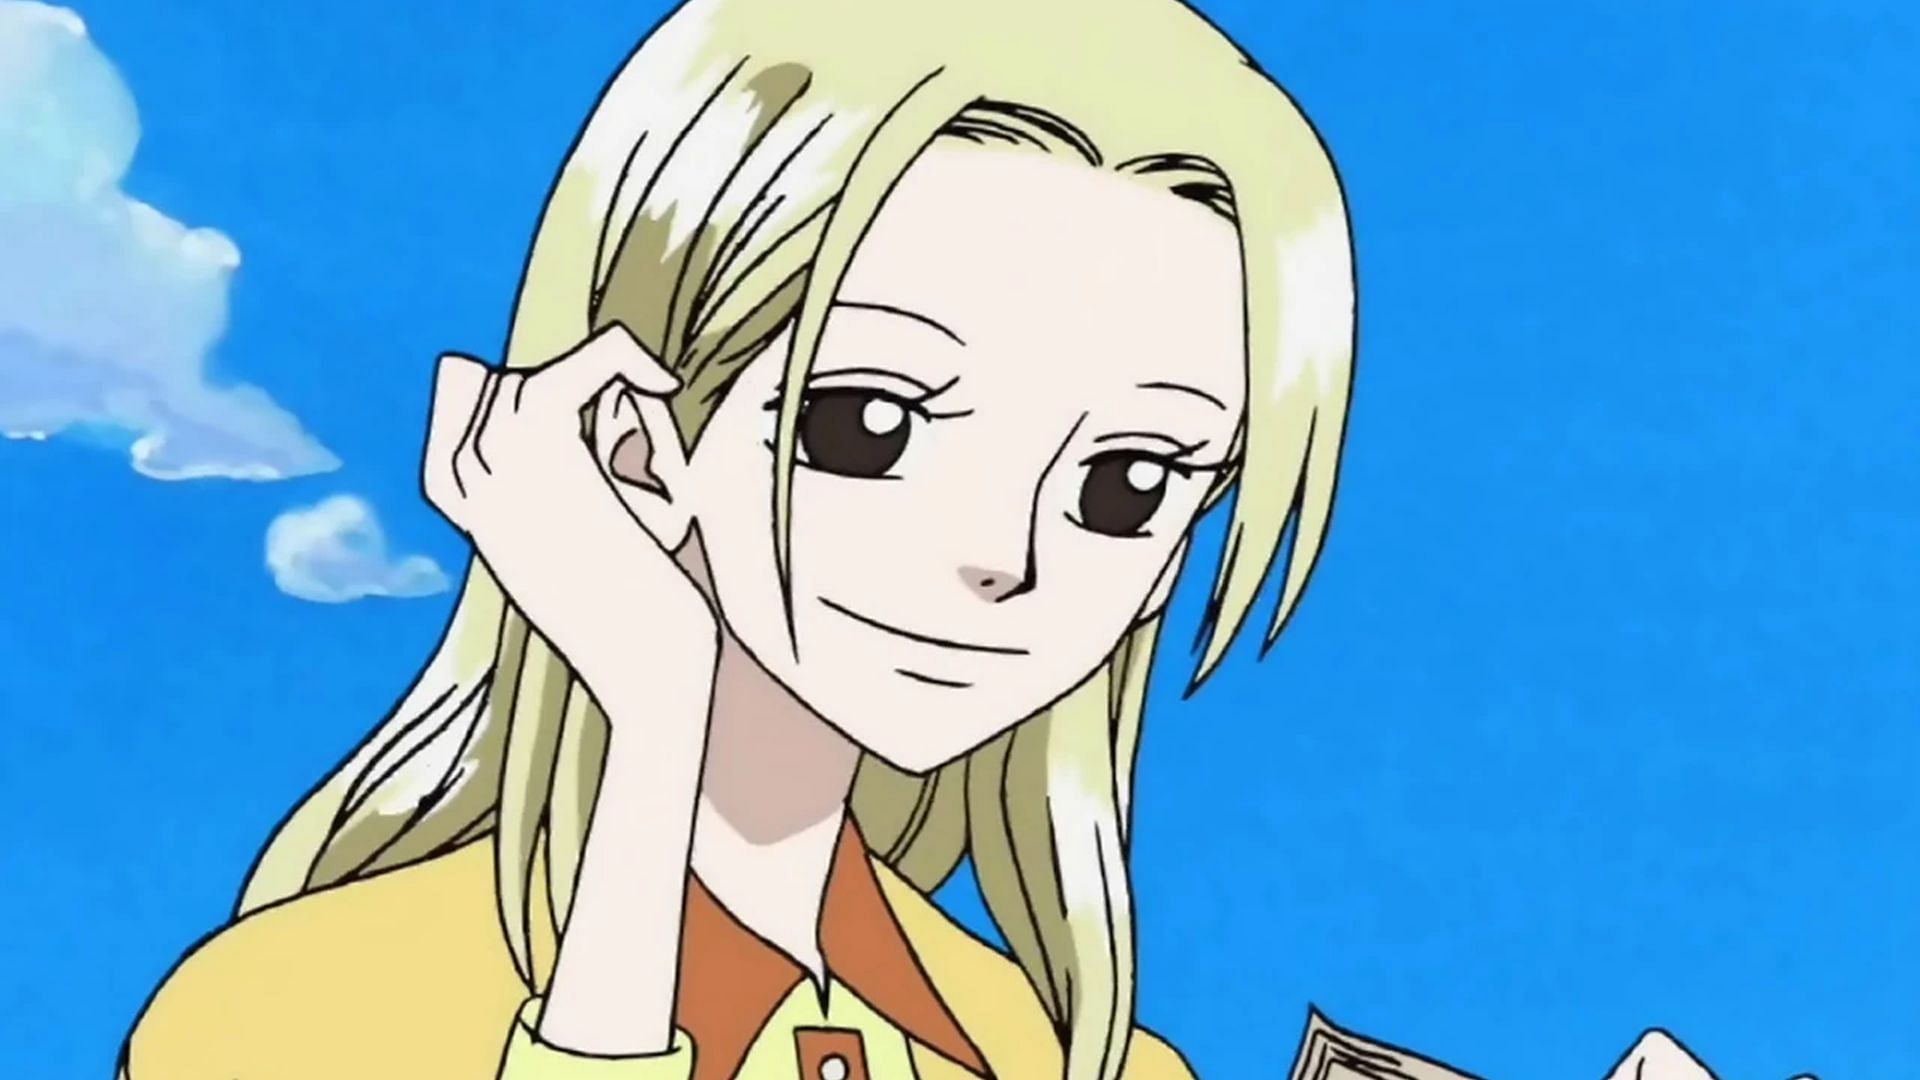 Kaya as seen in the One Piece anime (Image via Toei Animation)